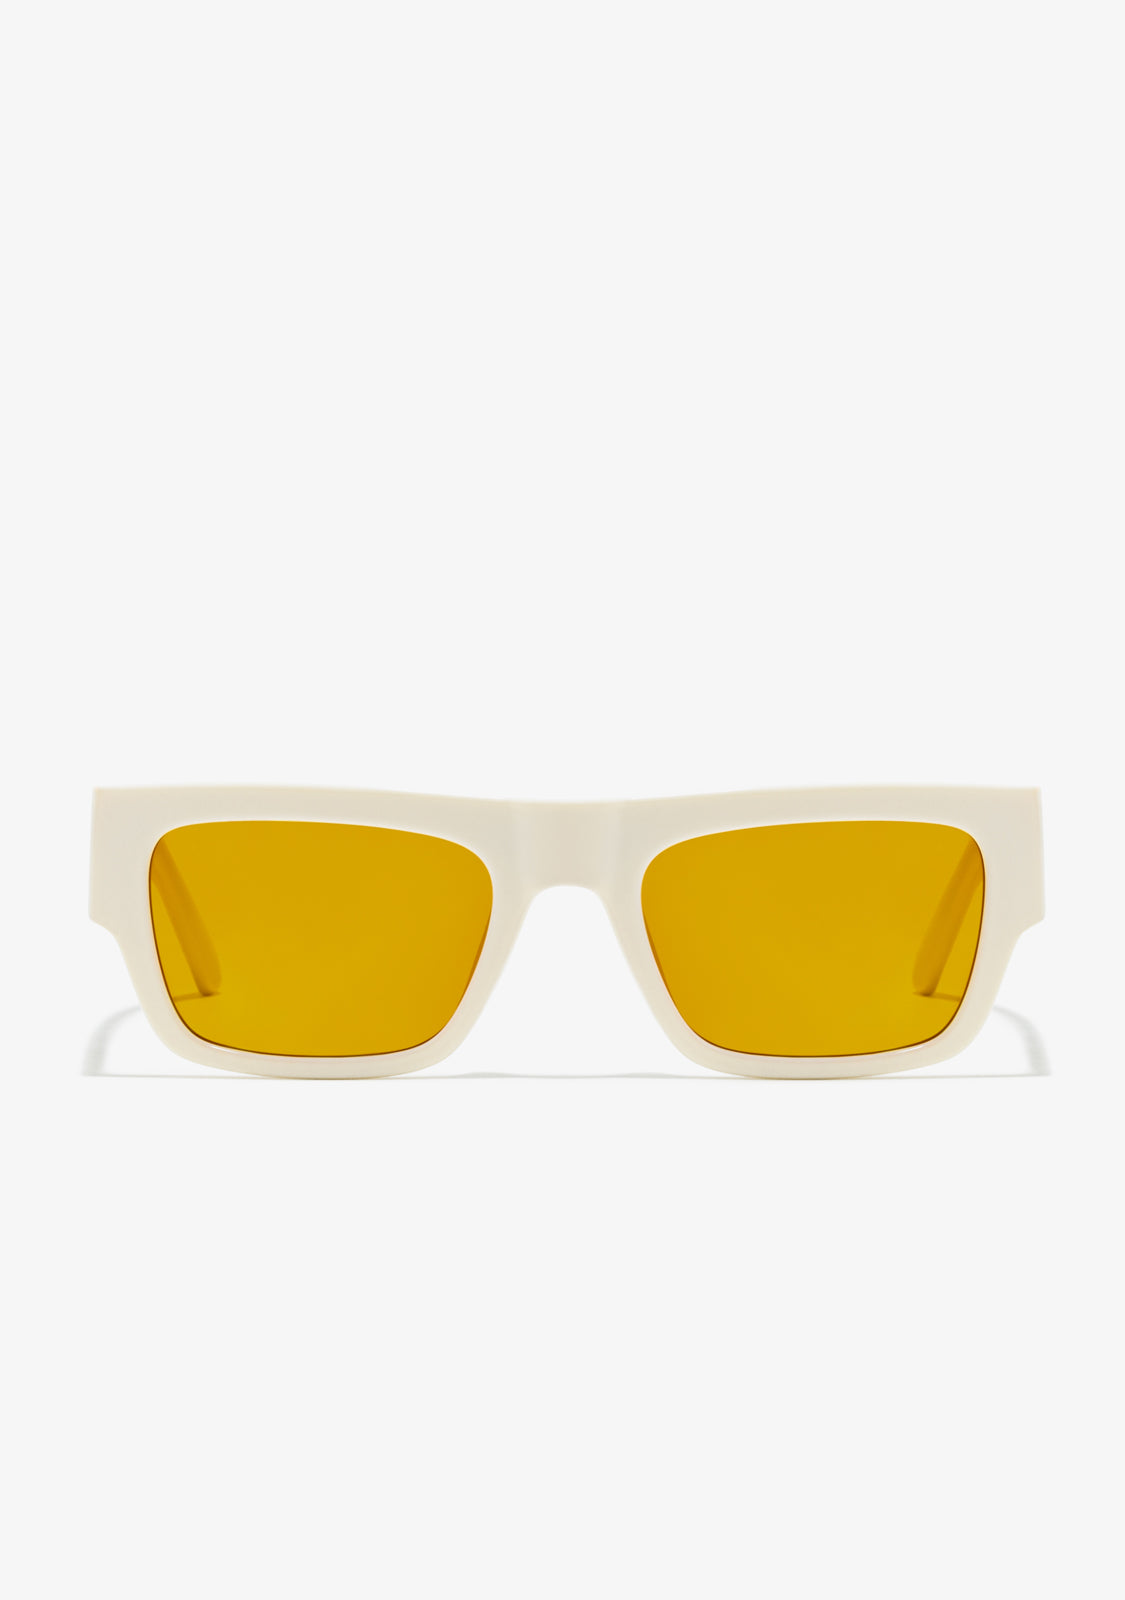 Emblem SQ White Ivory / Yellow